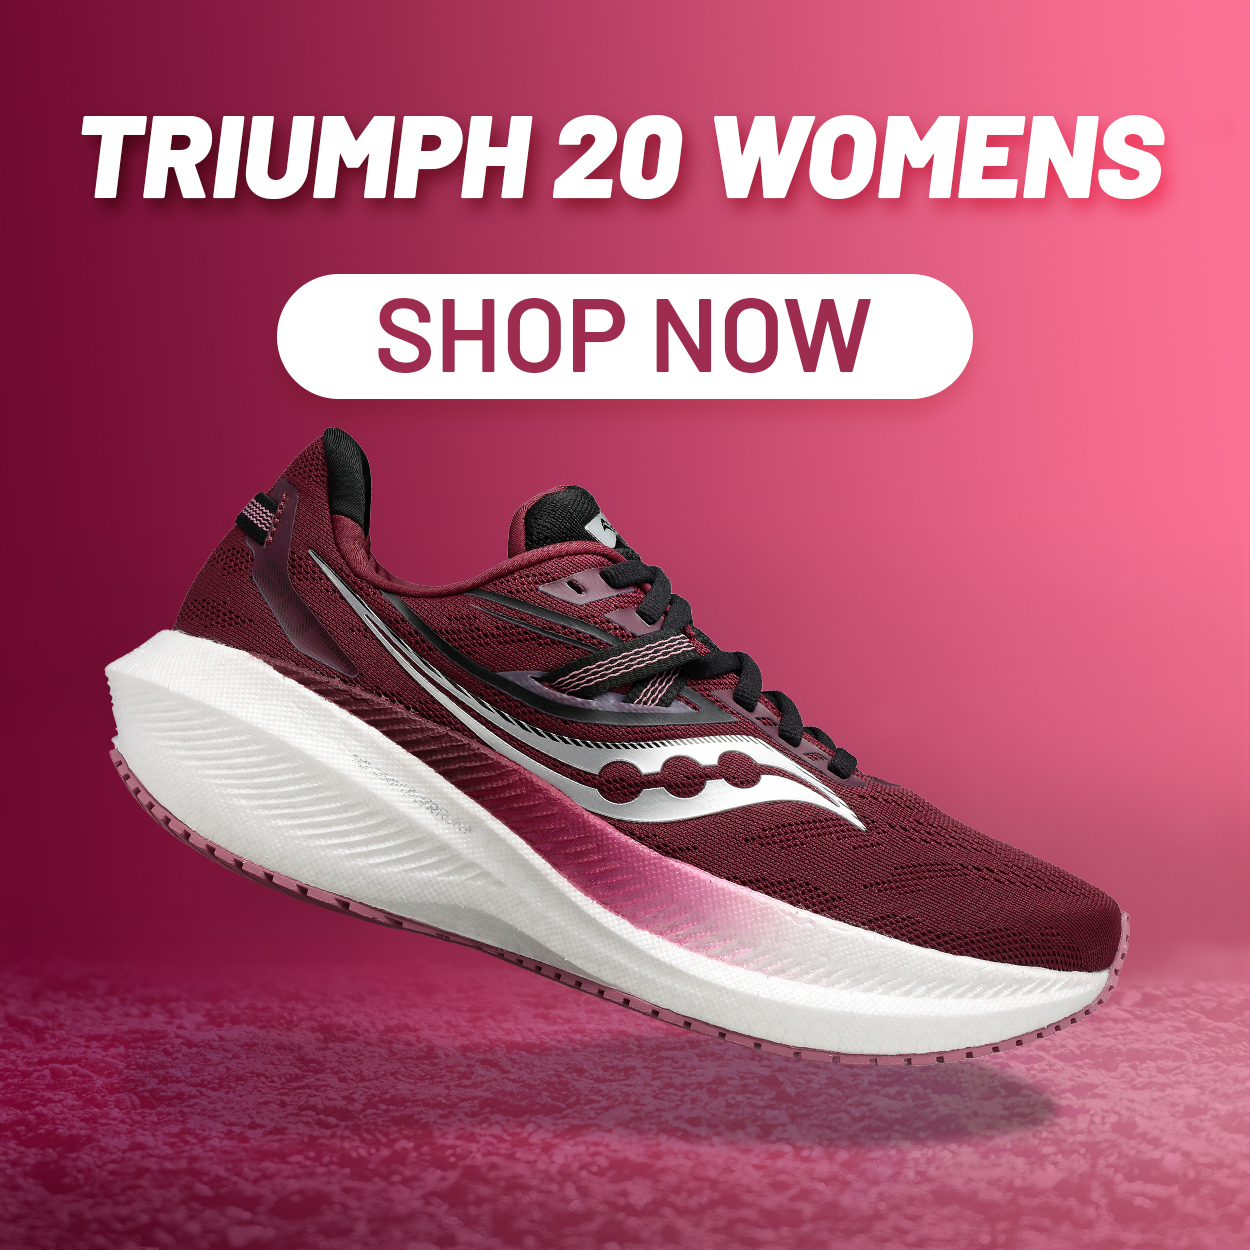 Saucony Women's Triumph 20 Running Shoes